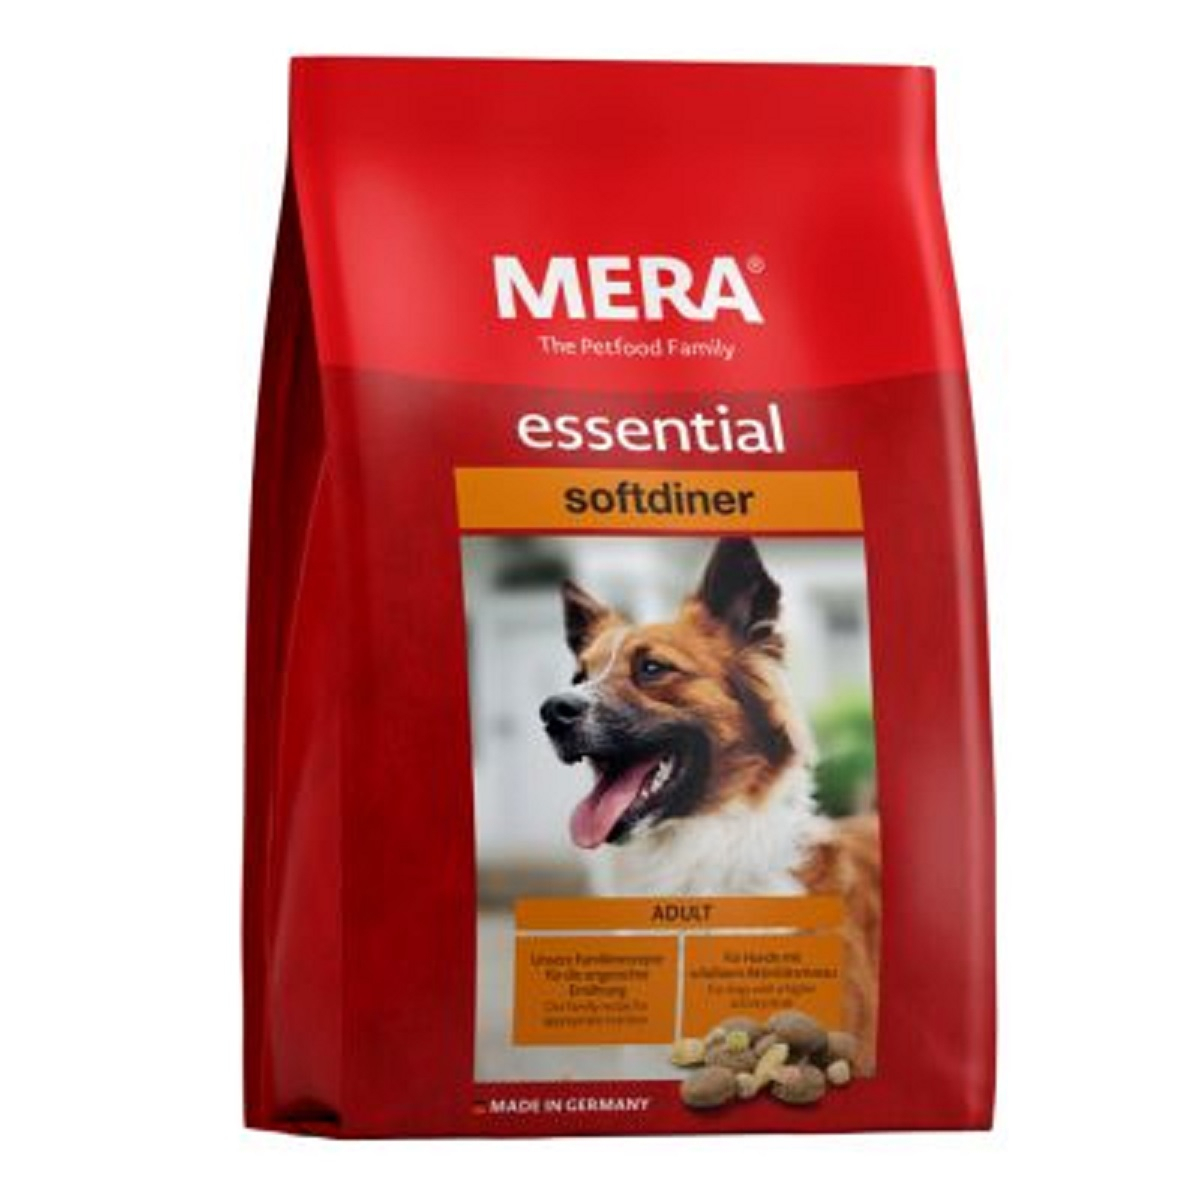 MERA Essential softdiner